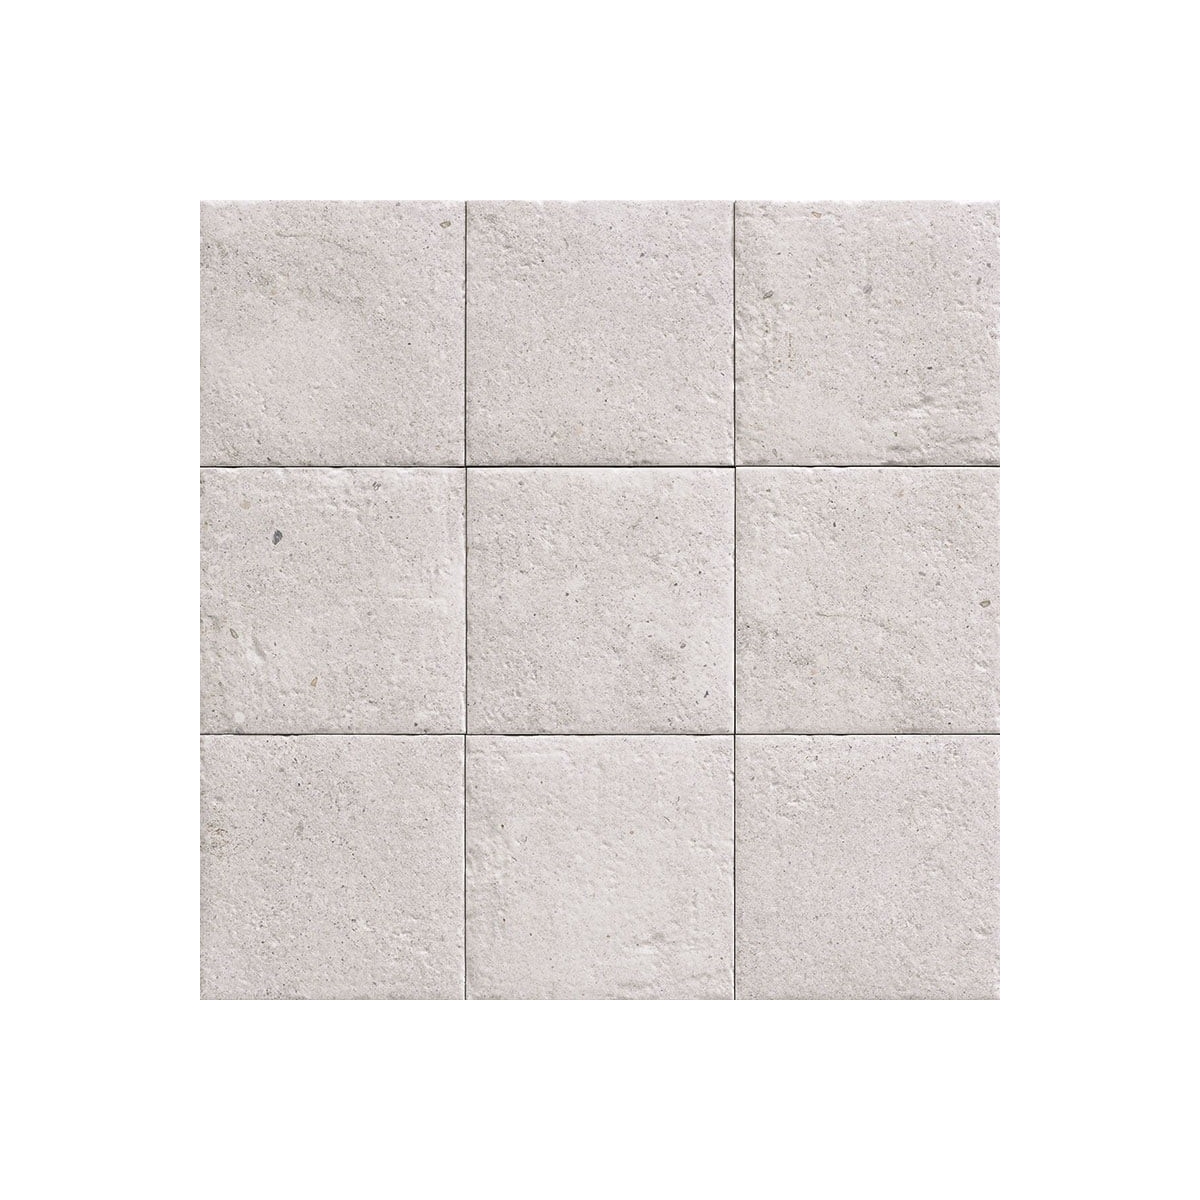 Bali White Stone 20x20 (caja 1 m2) - Serie Bali Stones - Marca Mainzu